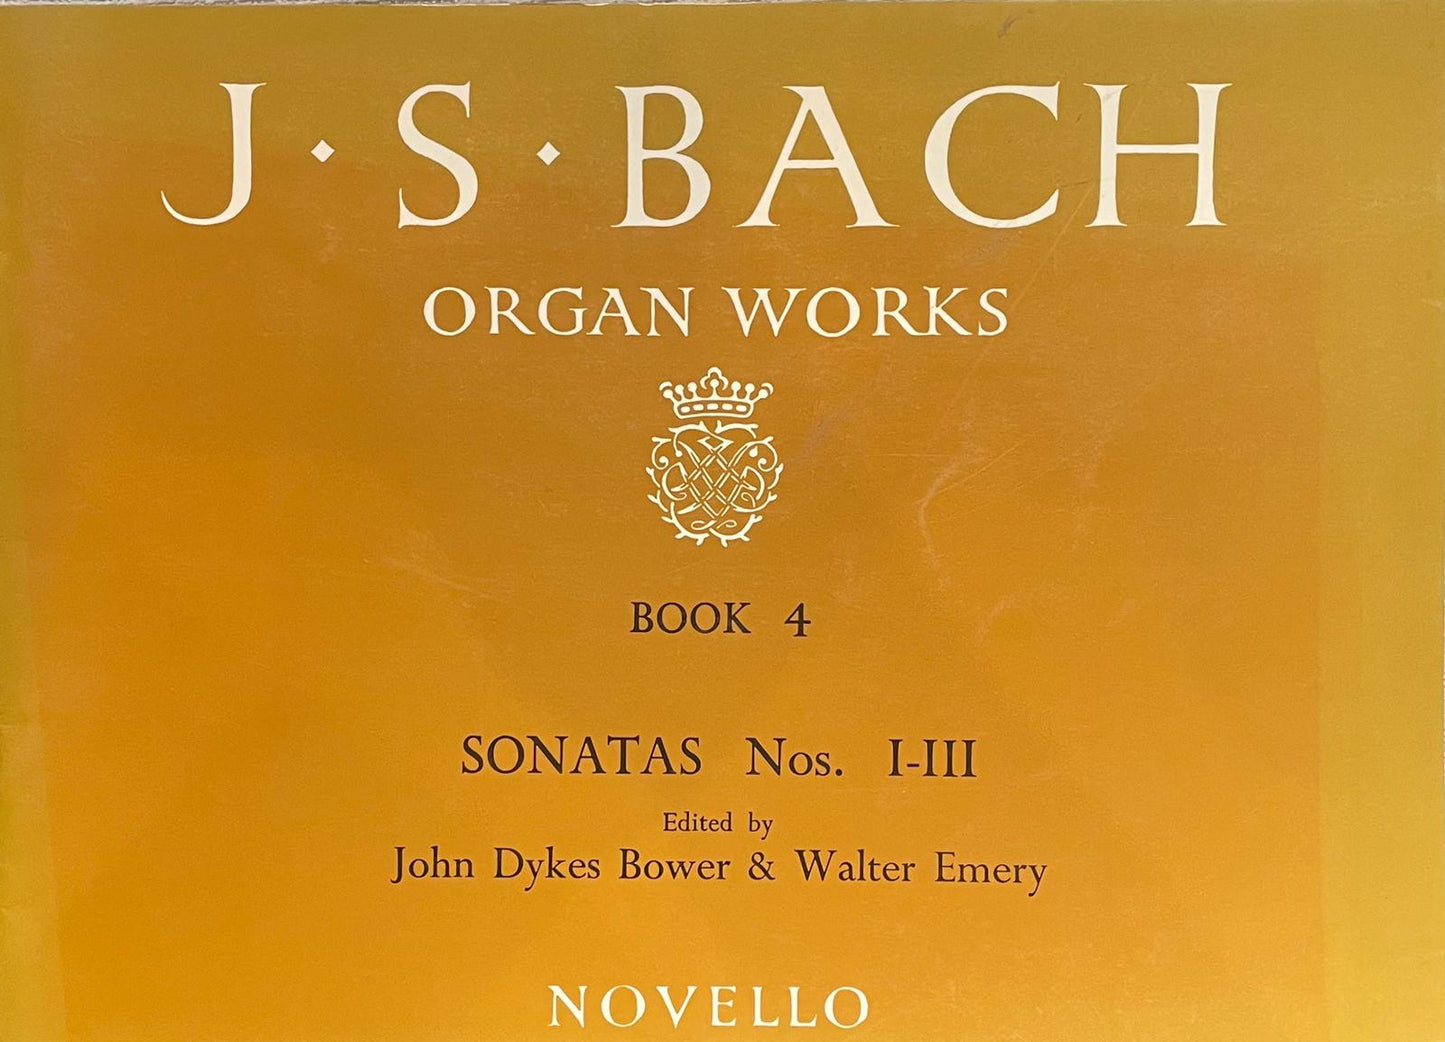 J.S. Bach Organ Works Book 4